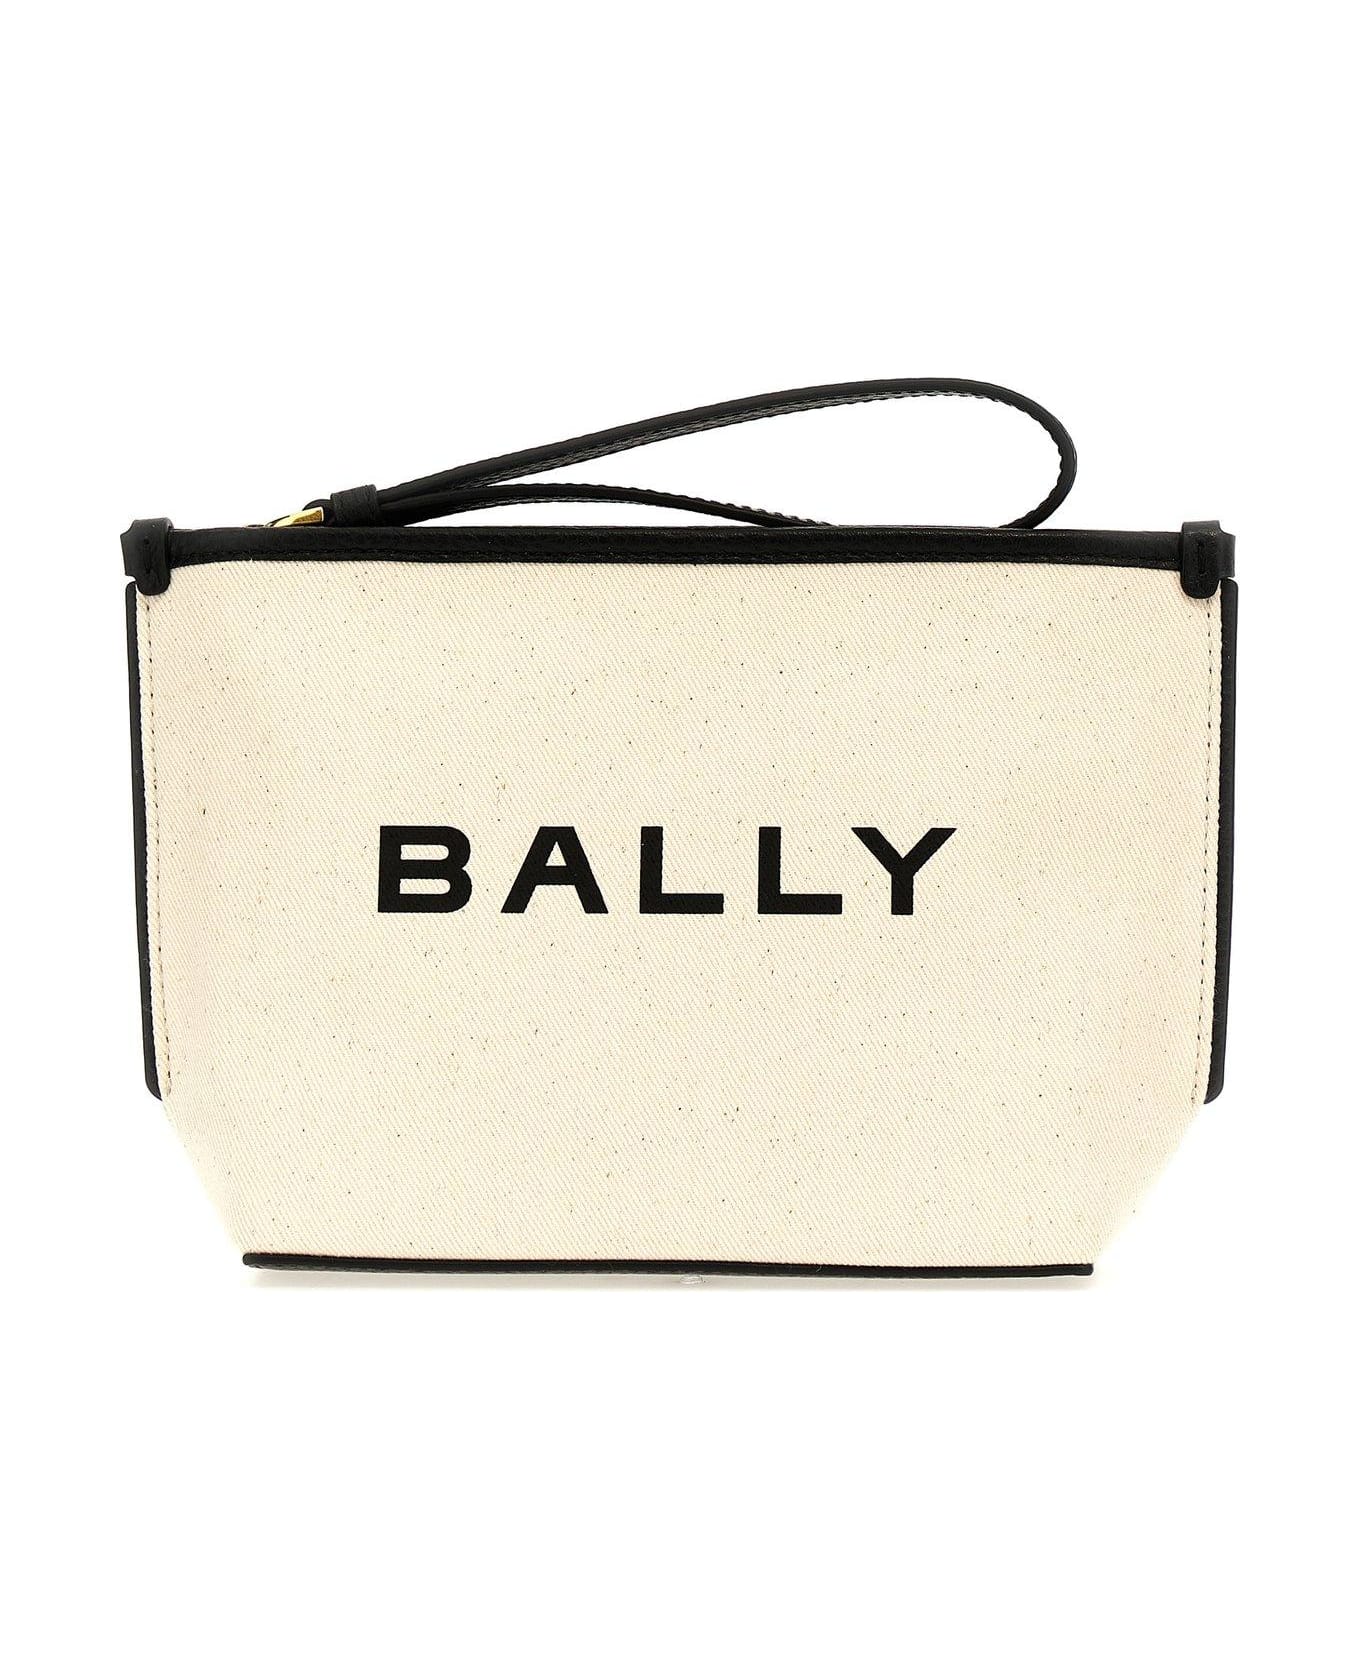 Bally Logo Printed Zipped Clutch Bag - Natural